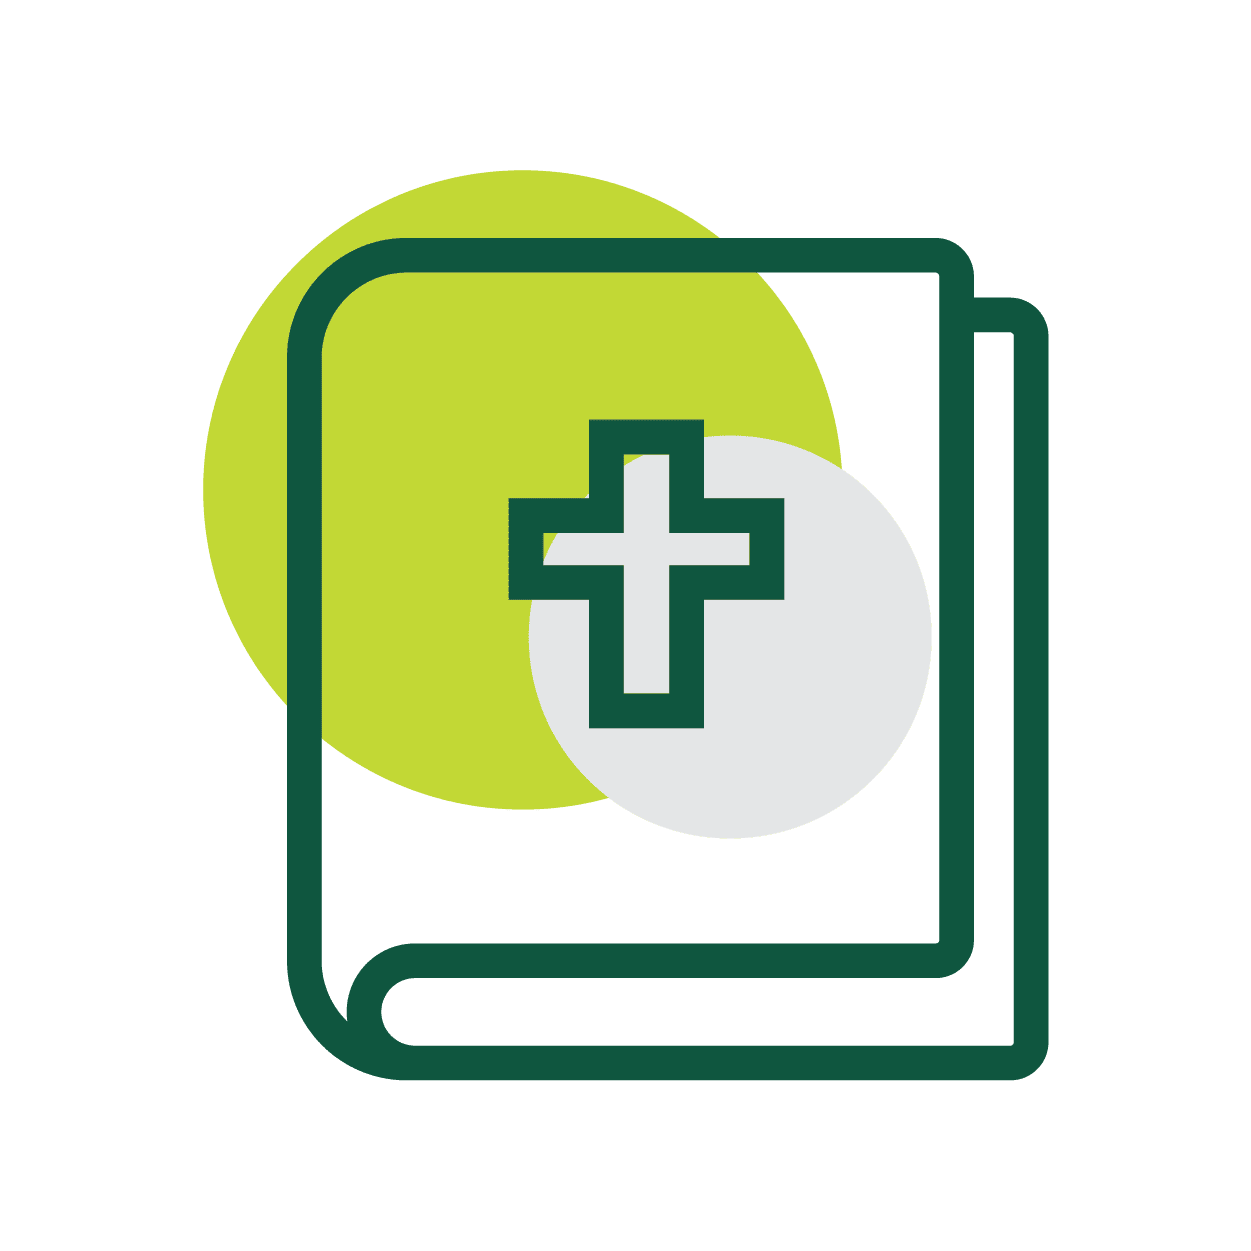 Christ-centered icon